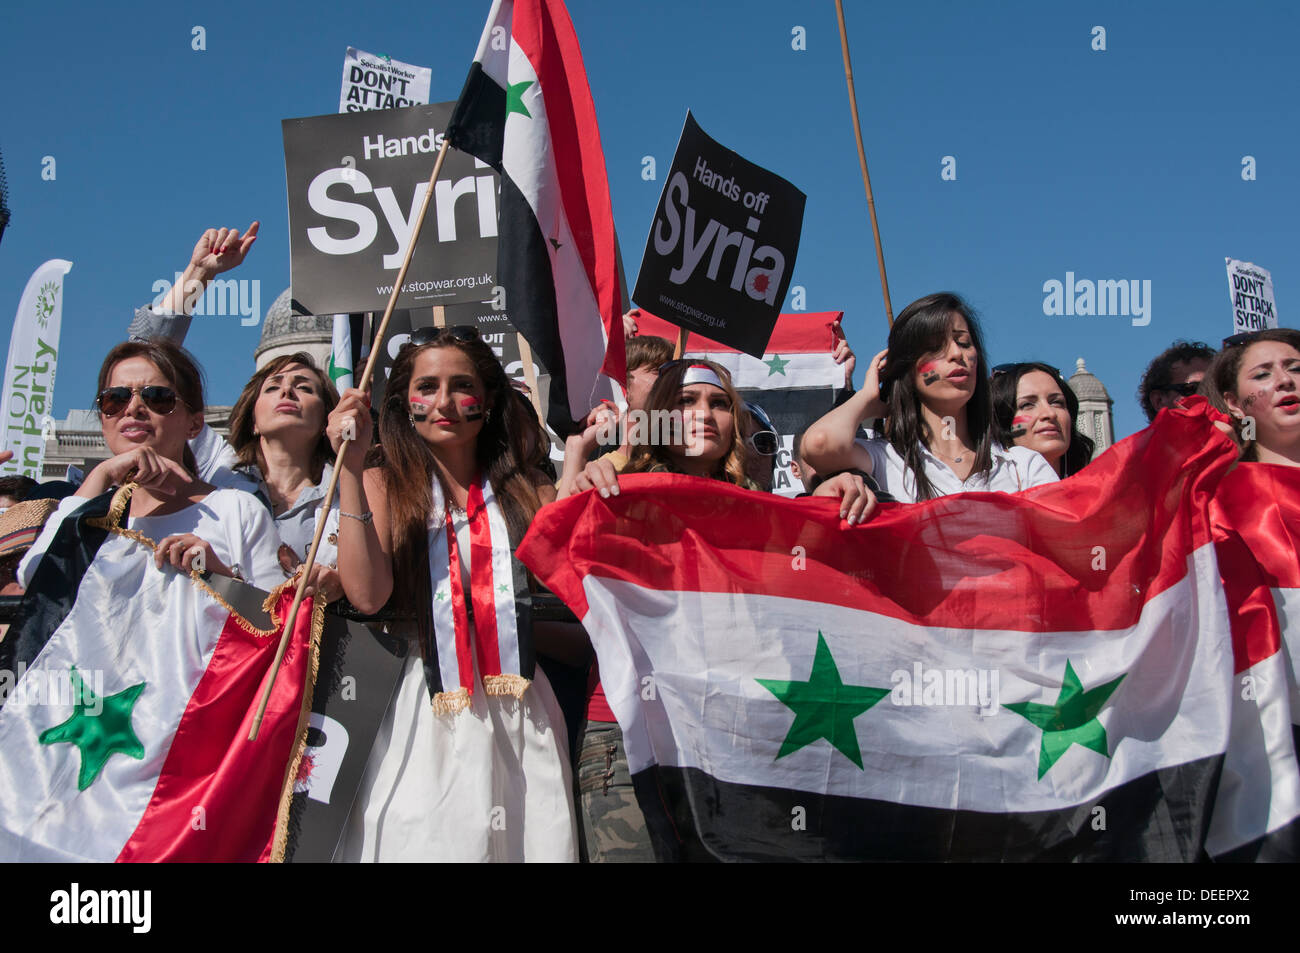 Syrian Protest  "Don"t Attack Syria" demonstration Trafalgar Square London 31/8/13 Stock Photo